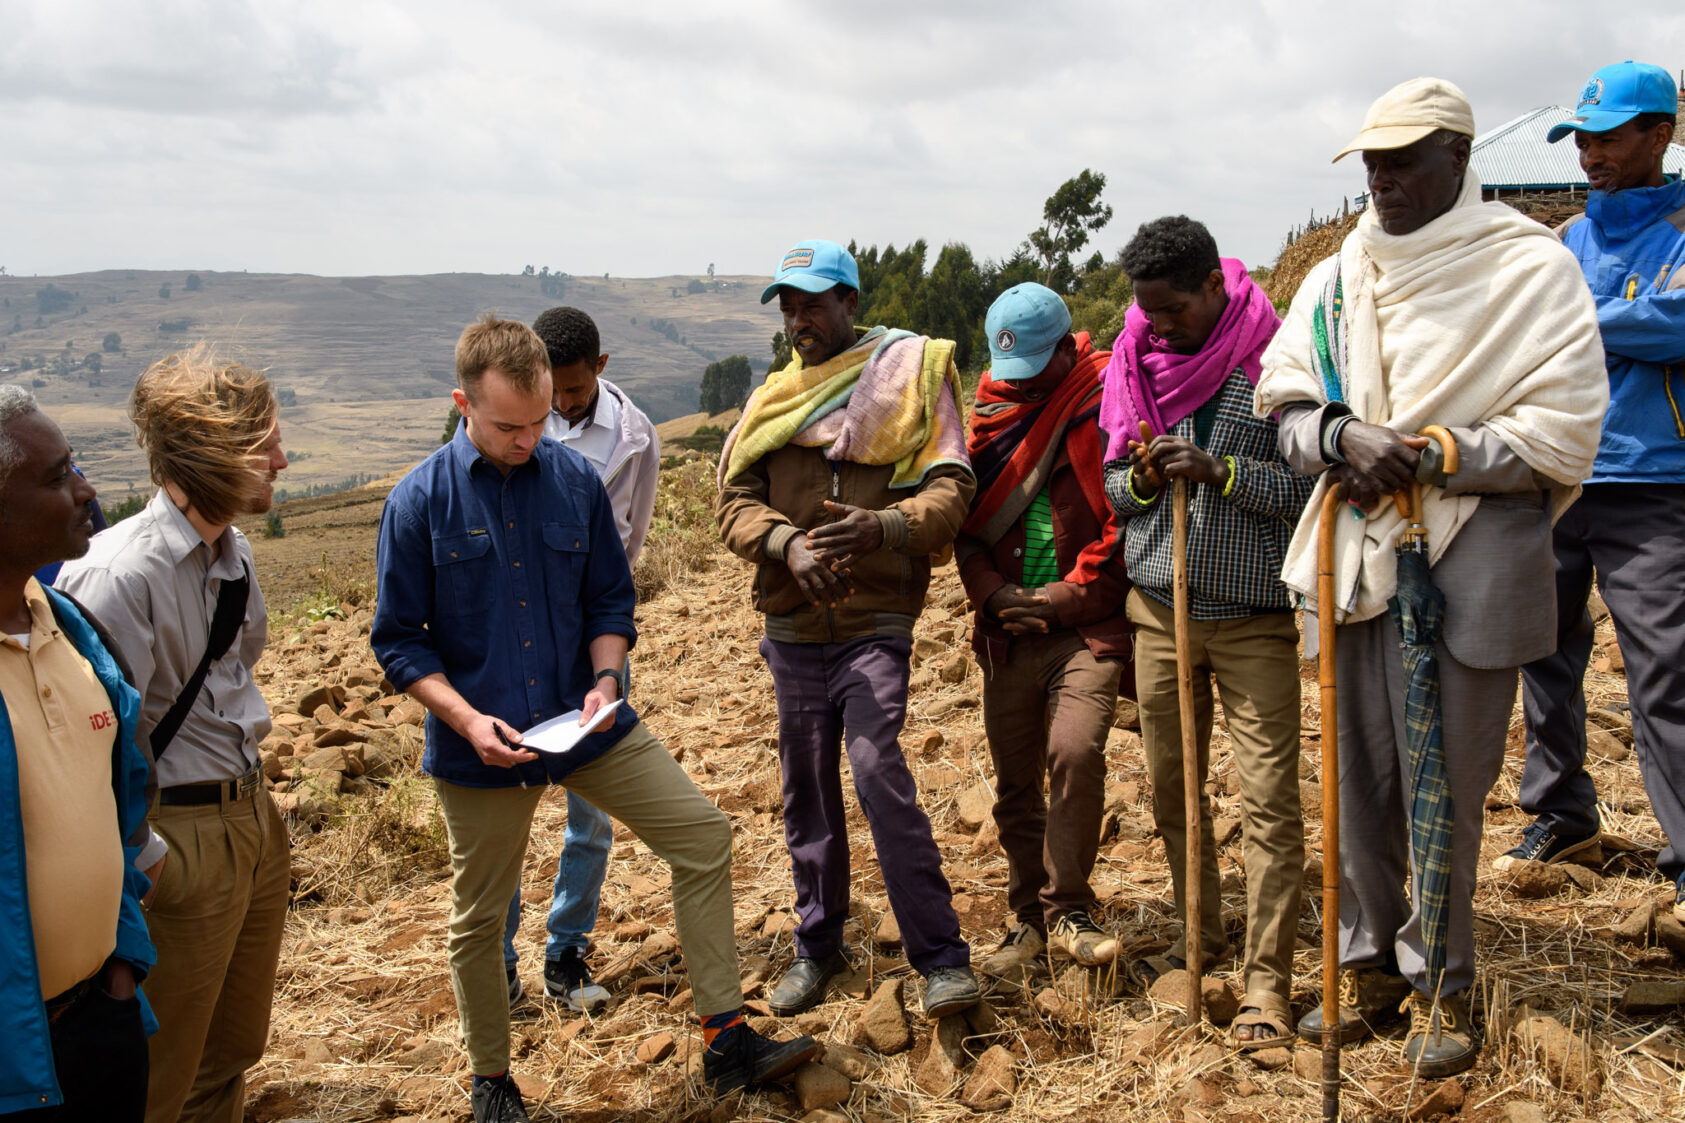 Erik Kolstad, NORCE, Community visit in Ethiopia, Ethiopia1, <p>Photo: Erik Kolstad, NORCE</p>, 